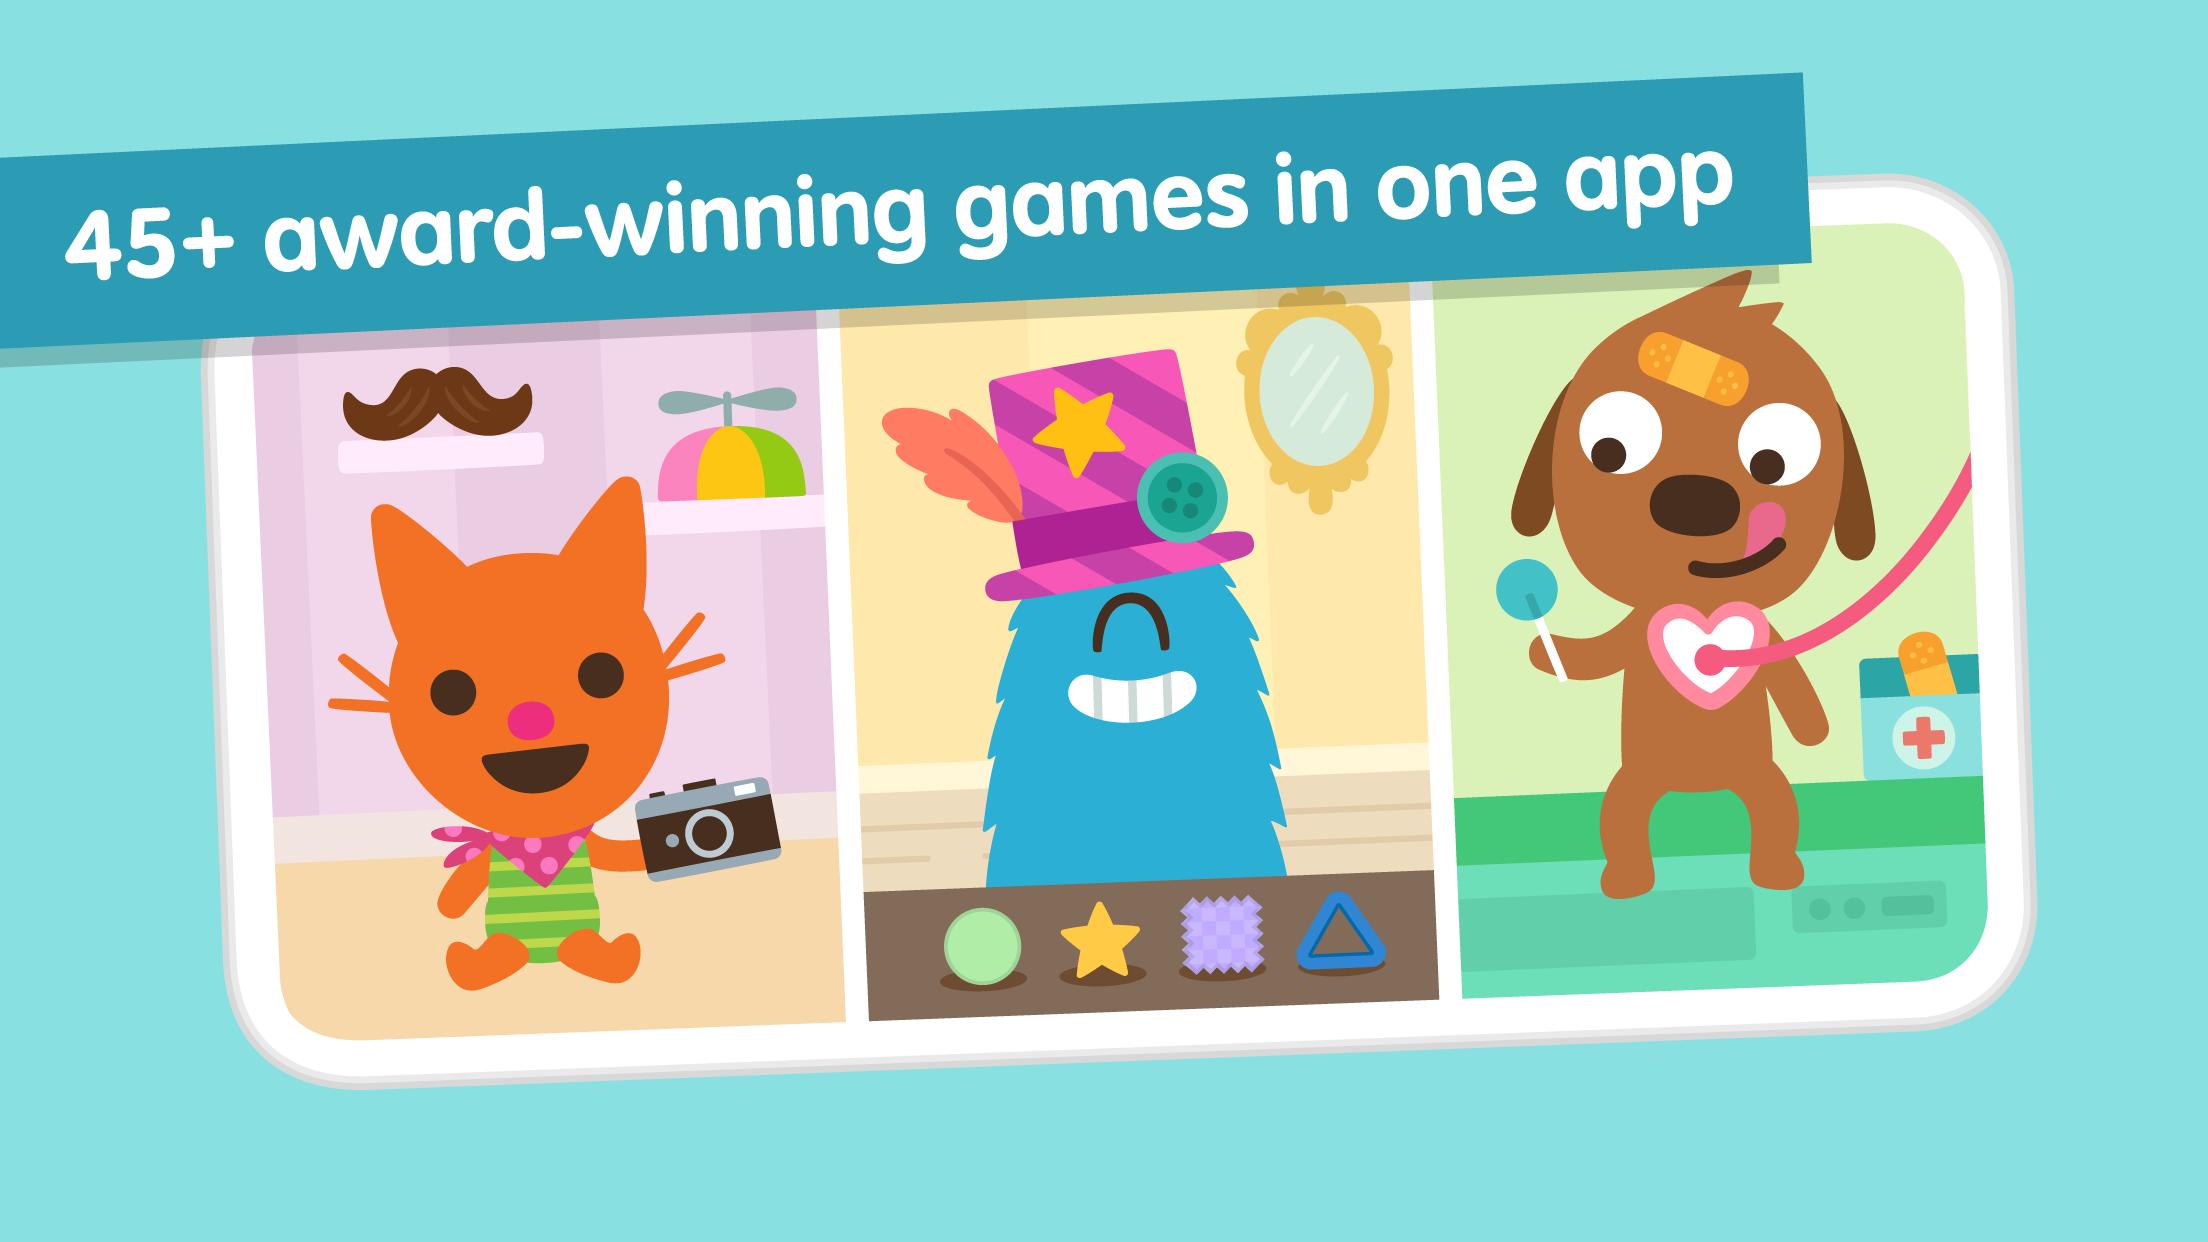 Computador Infantil Mini Jogos – Apps no Google Play